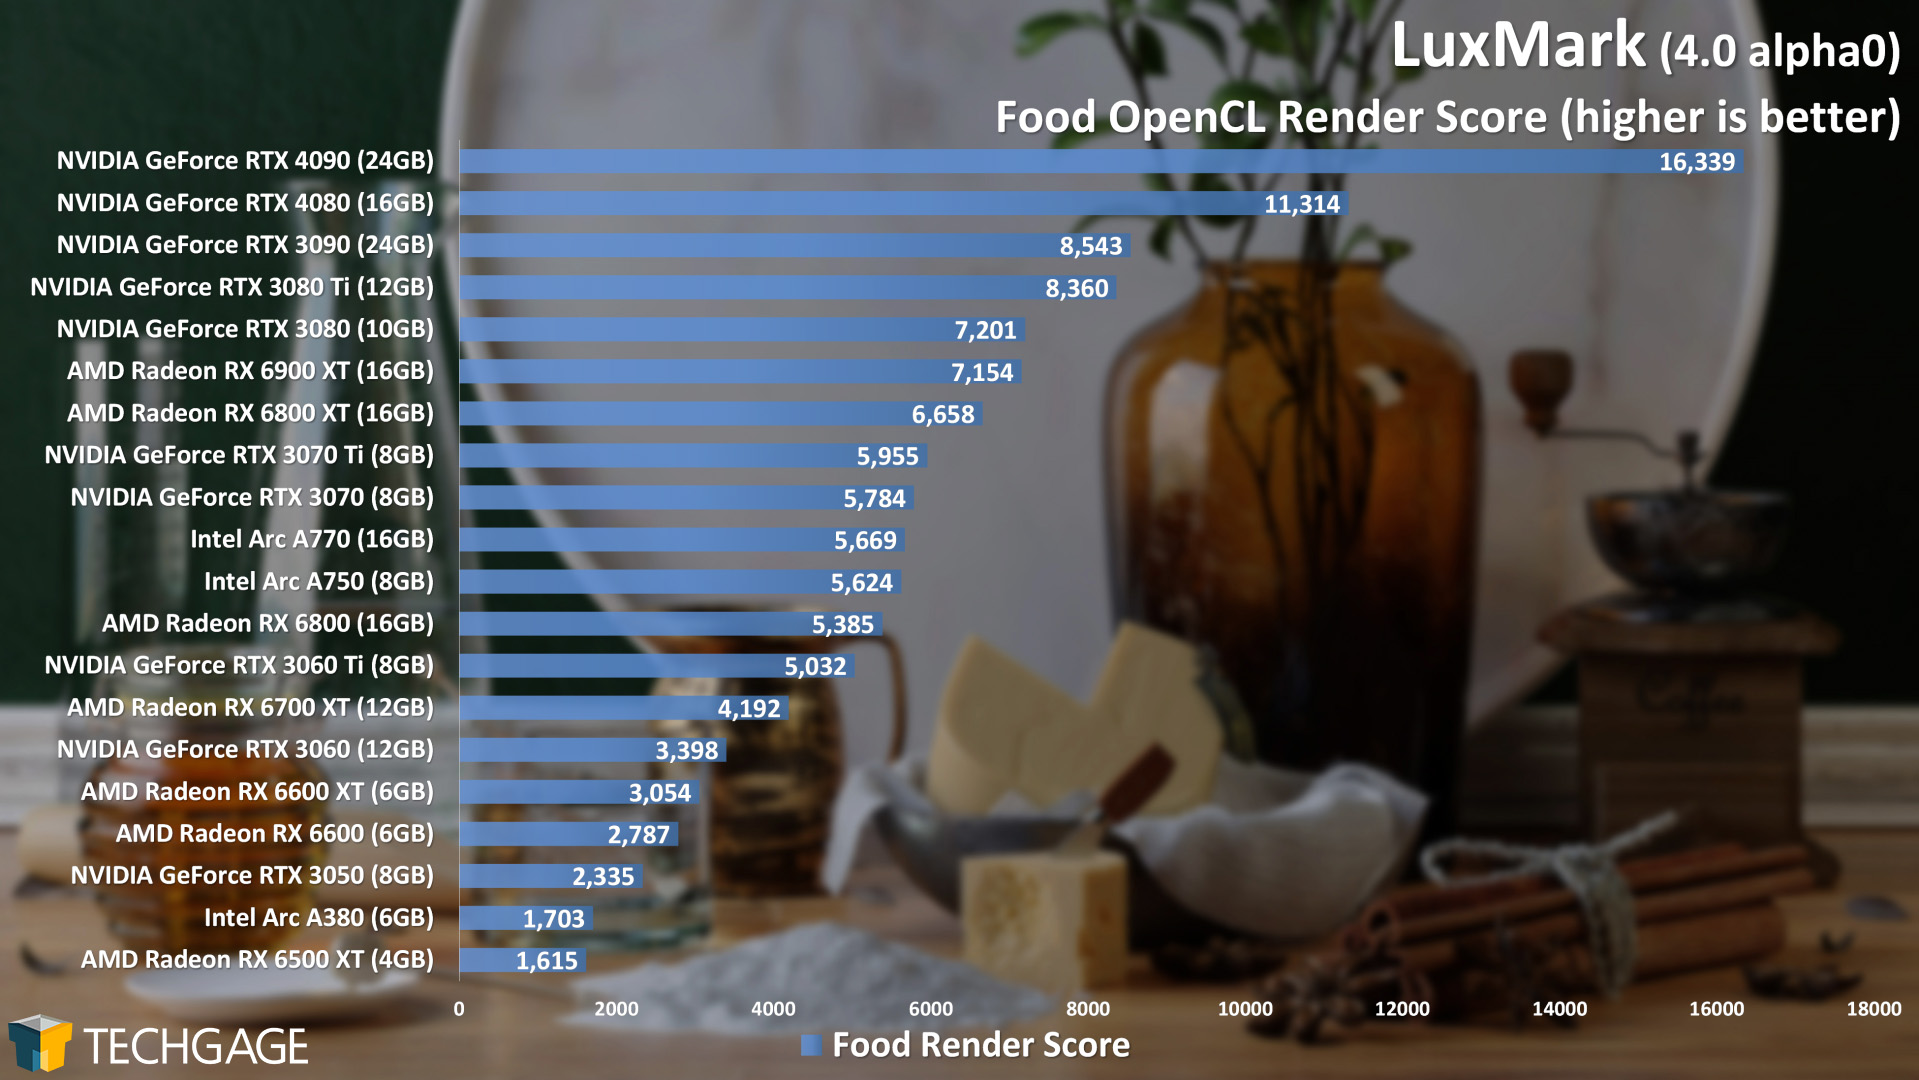 LuxMark Performance - Food OpenCL Score (NVIDIA GeForce RTX 4080)